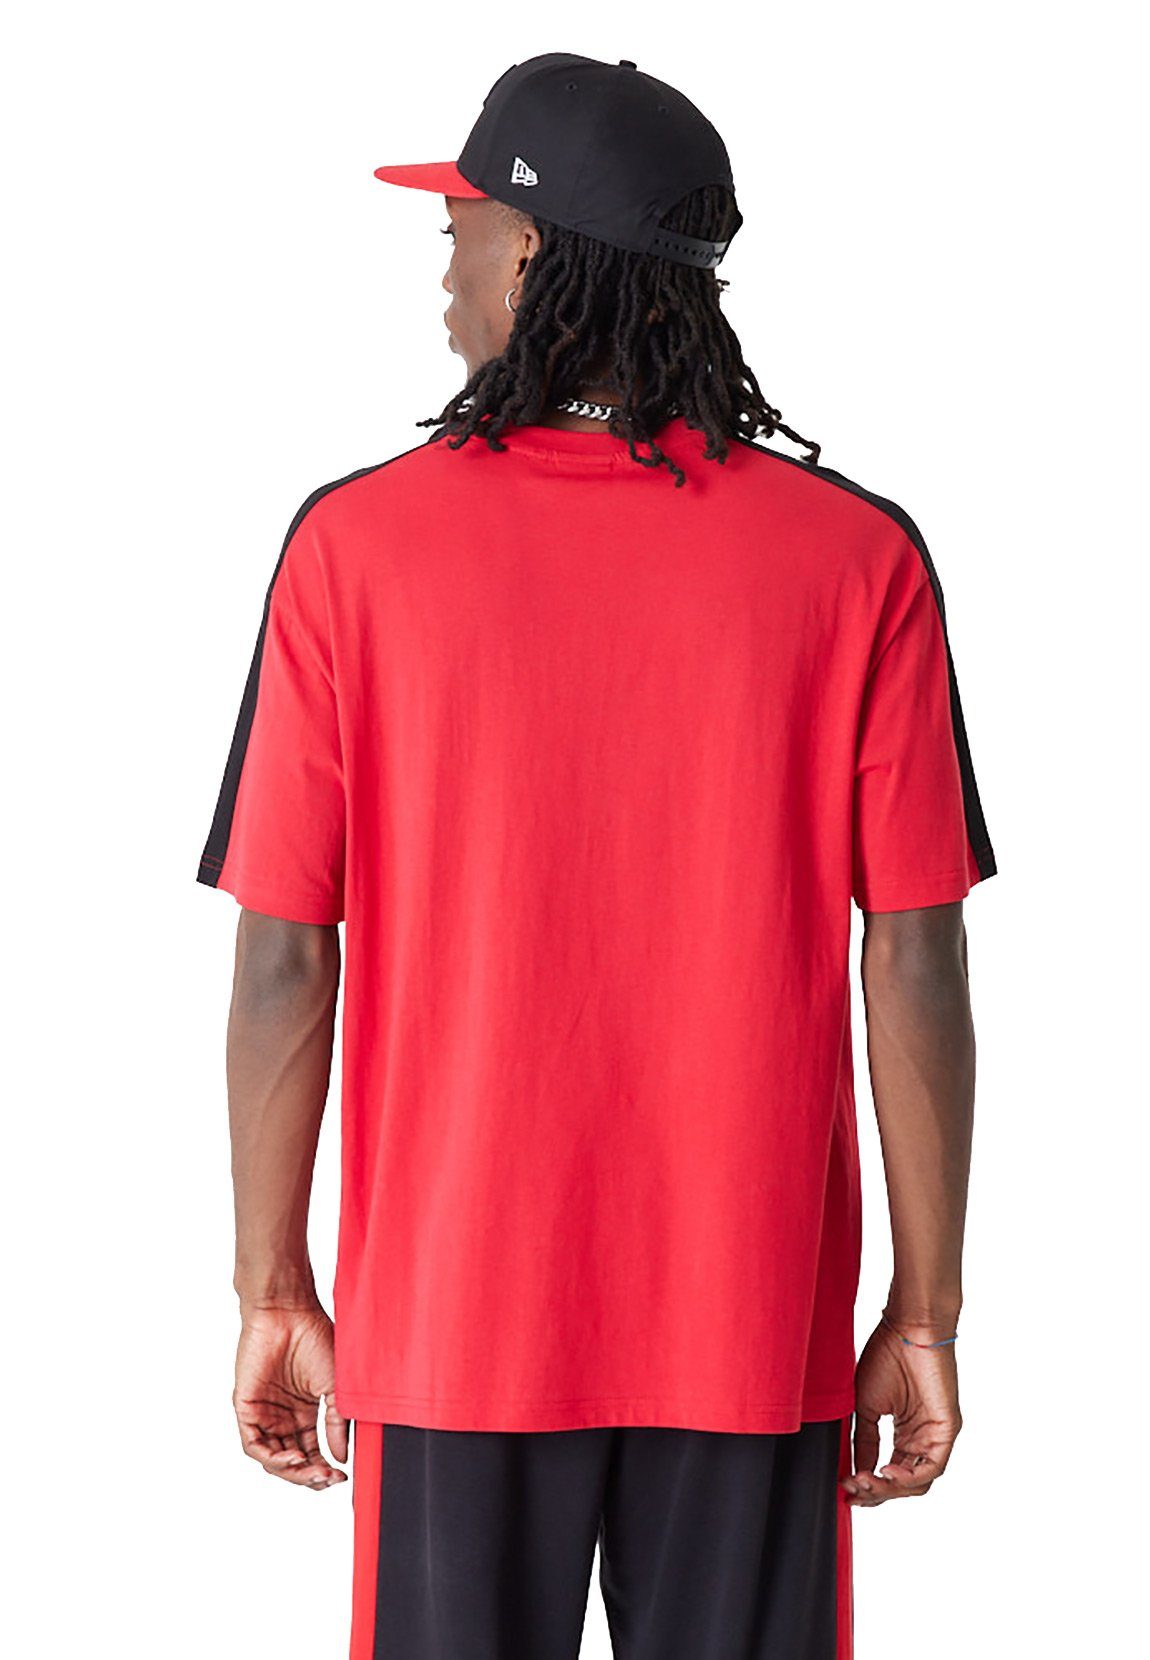 Era T-Shirt CHICAGO BLOCK Rot Red OS T-Shirt NBA COLOUR Era New Herren New BULLS TEE